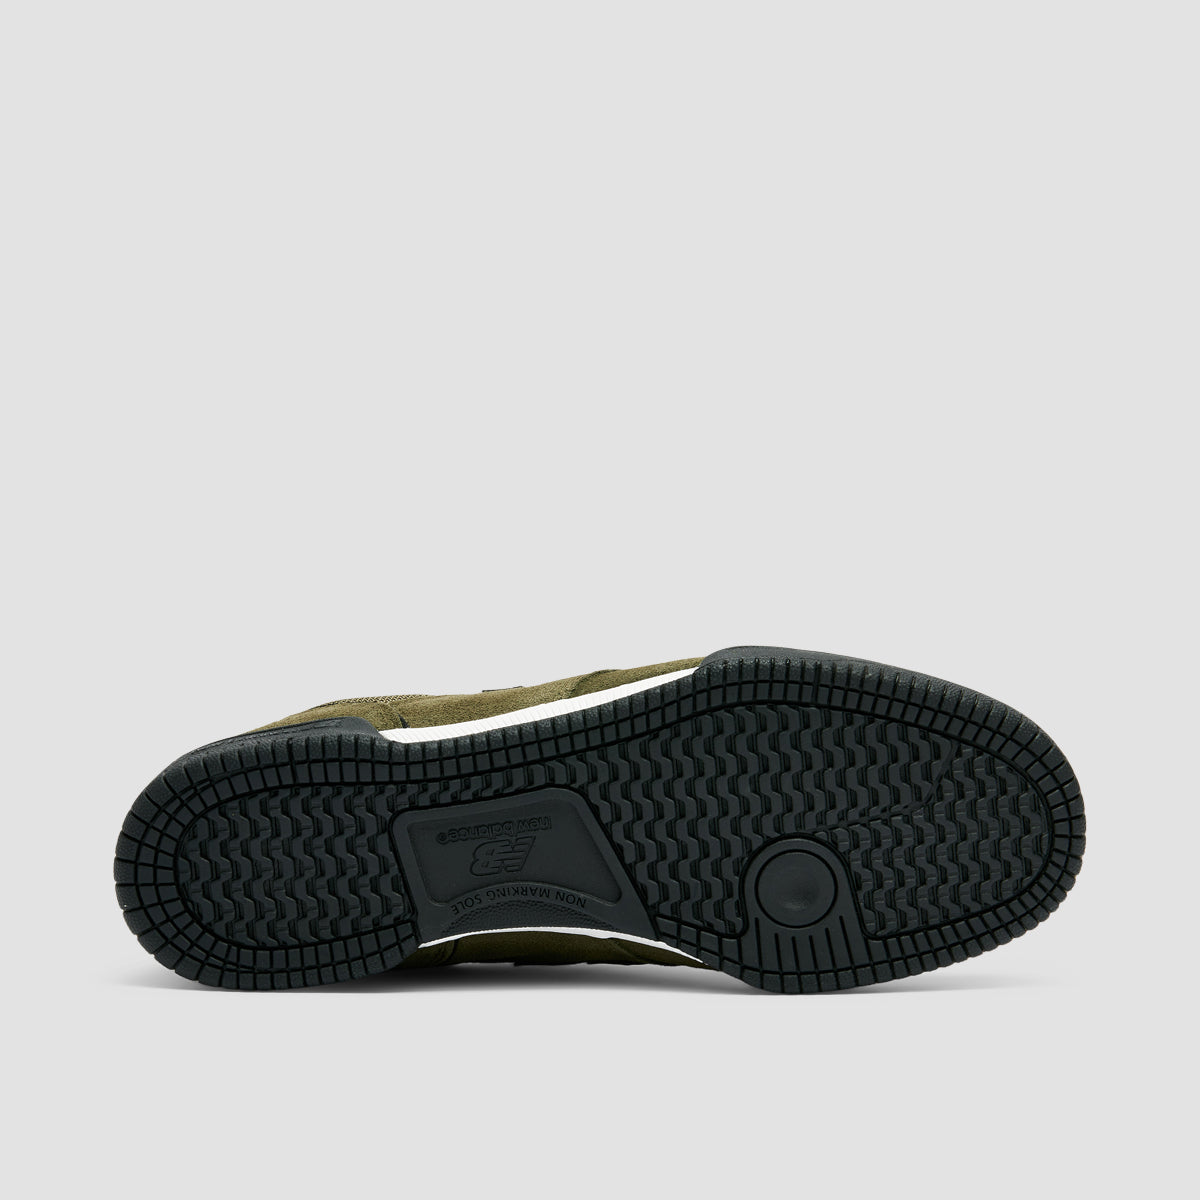 New Balance Numeric 600 Tom Knox Shoes - Olive/Black